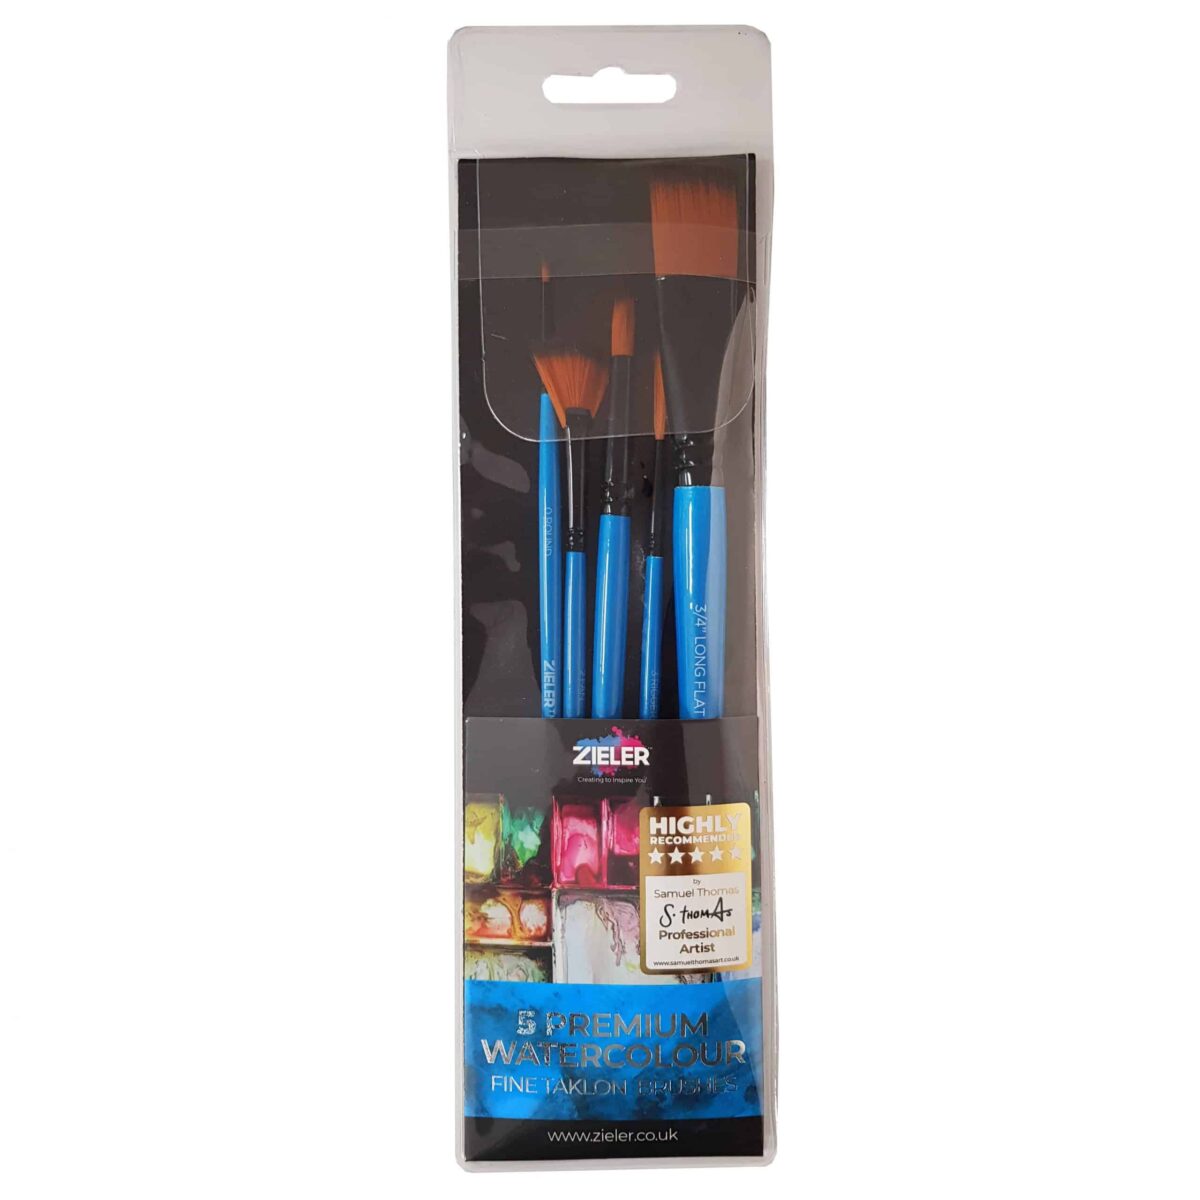 Zieler 5 Premium Watercolour Artists Brushes